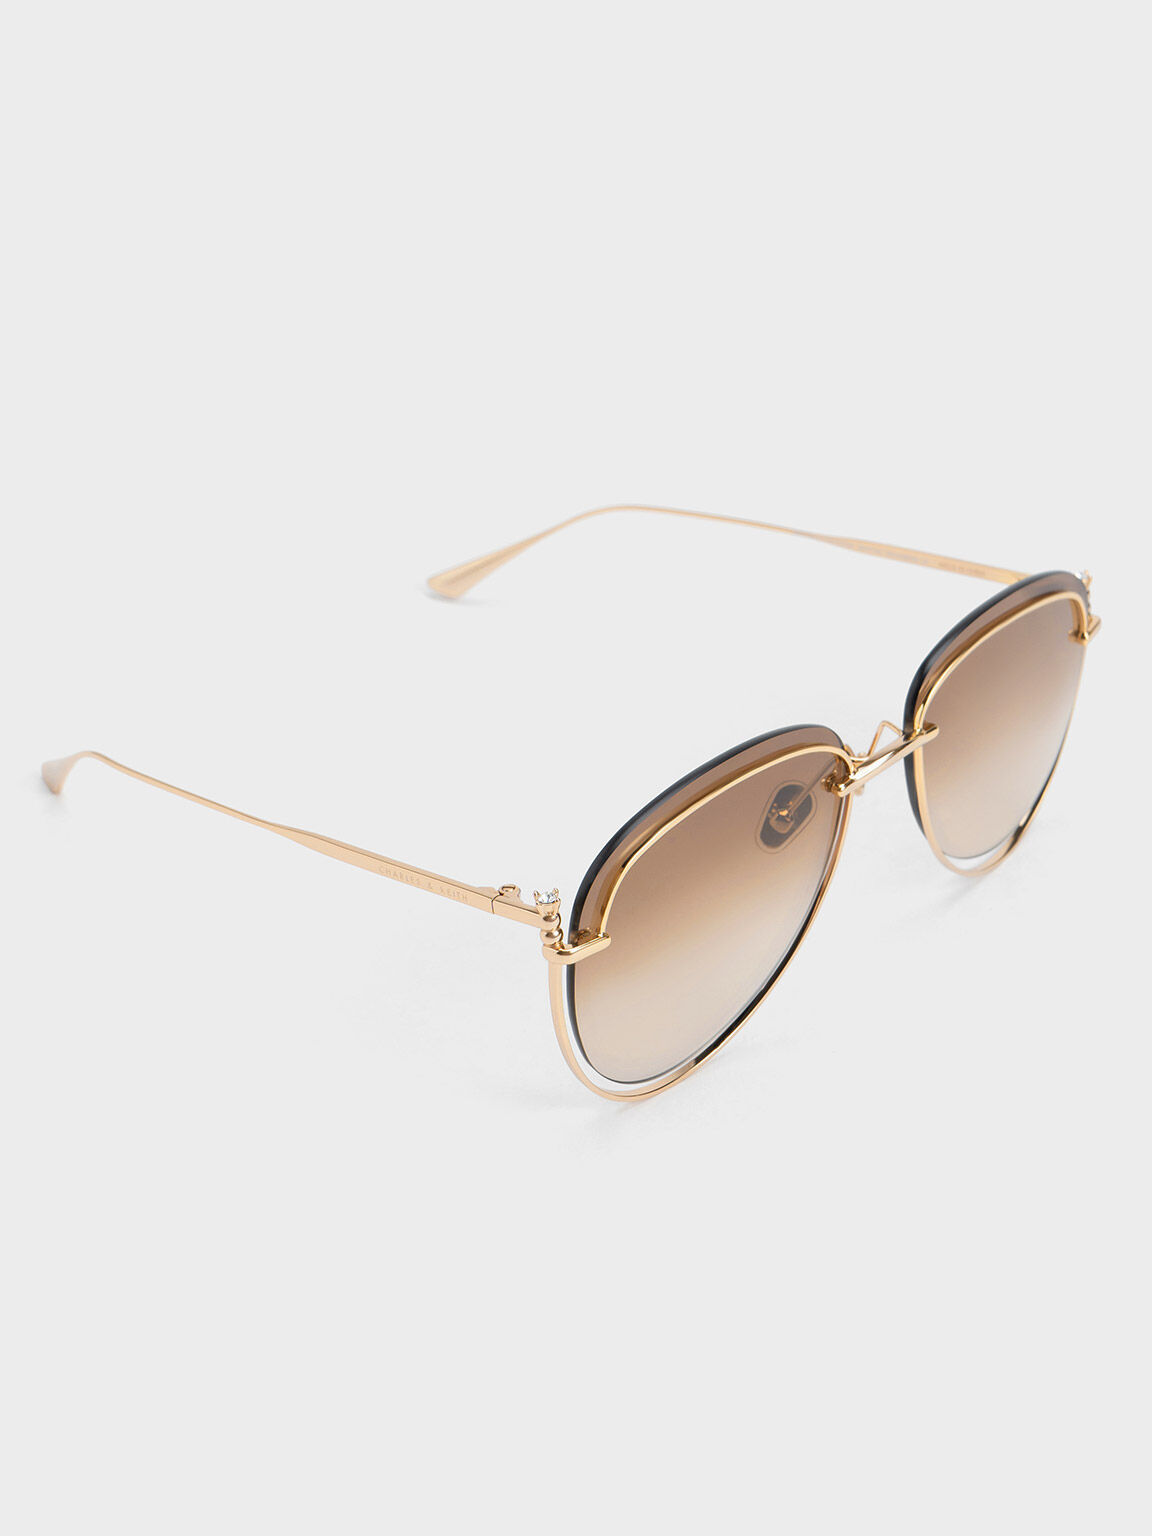 Oversized Wireframe Aviator Sunglasses, Gold, hi-res